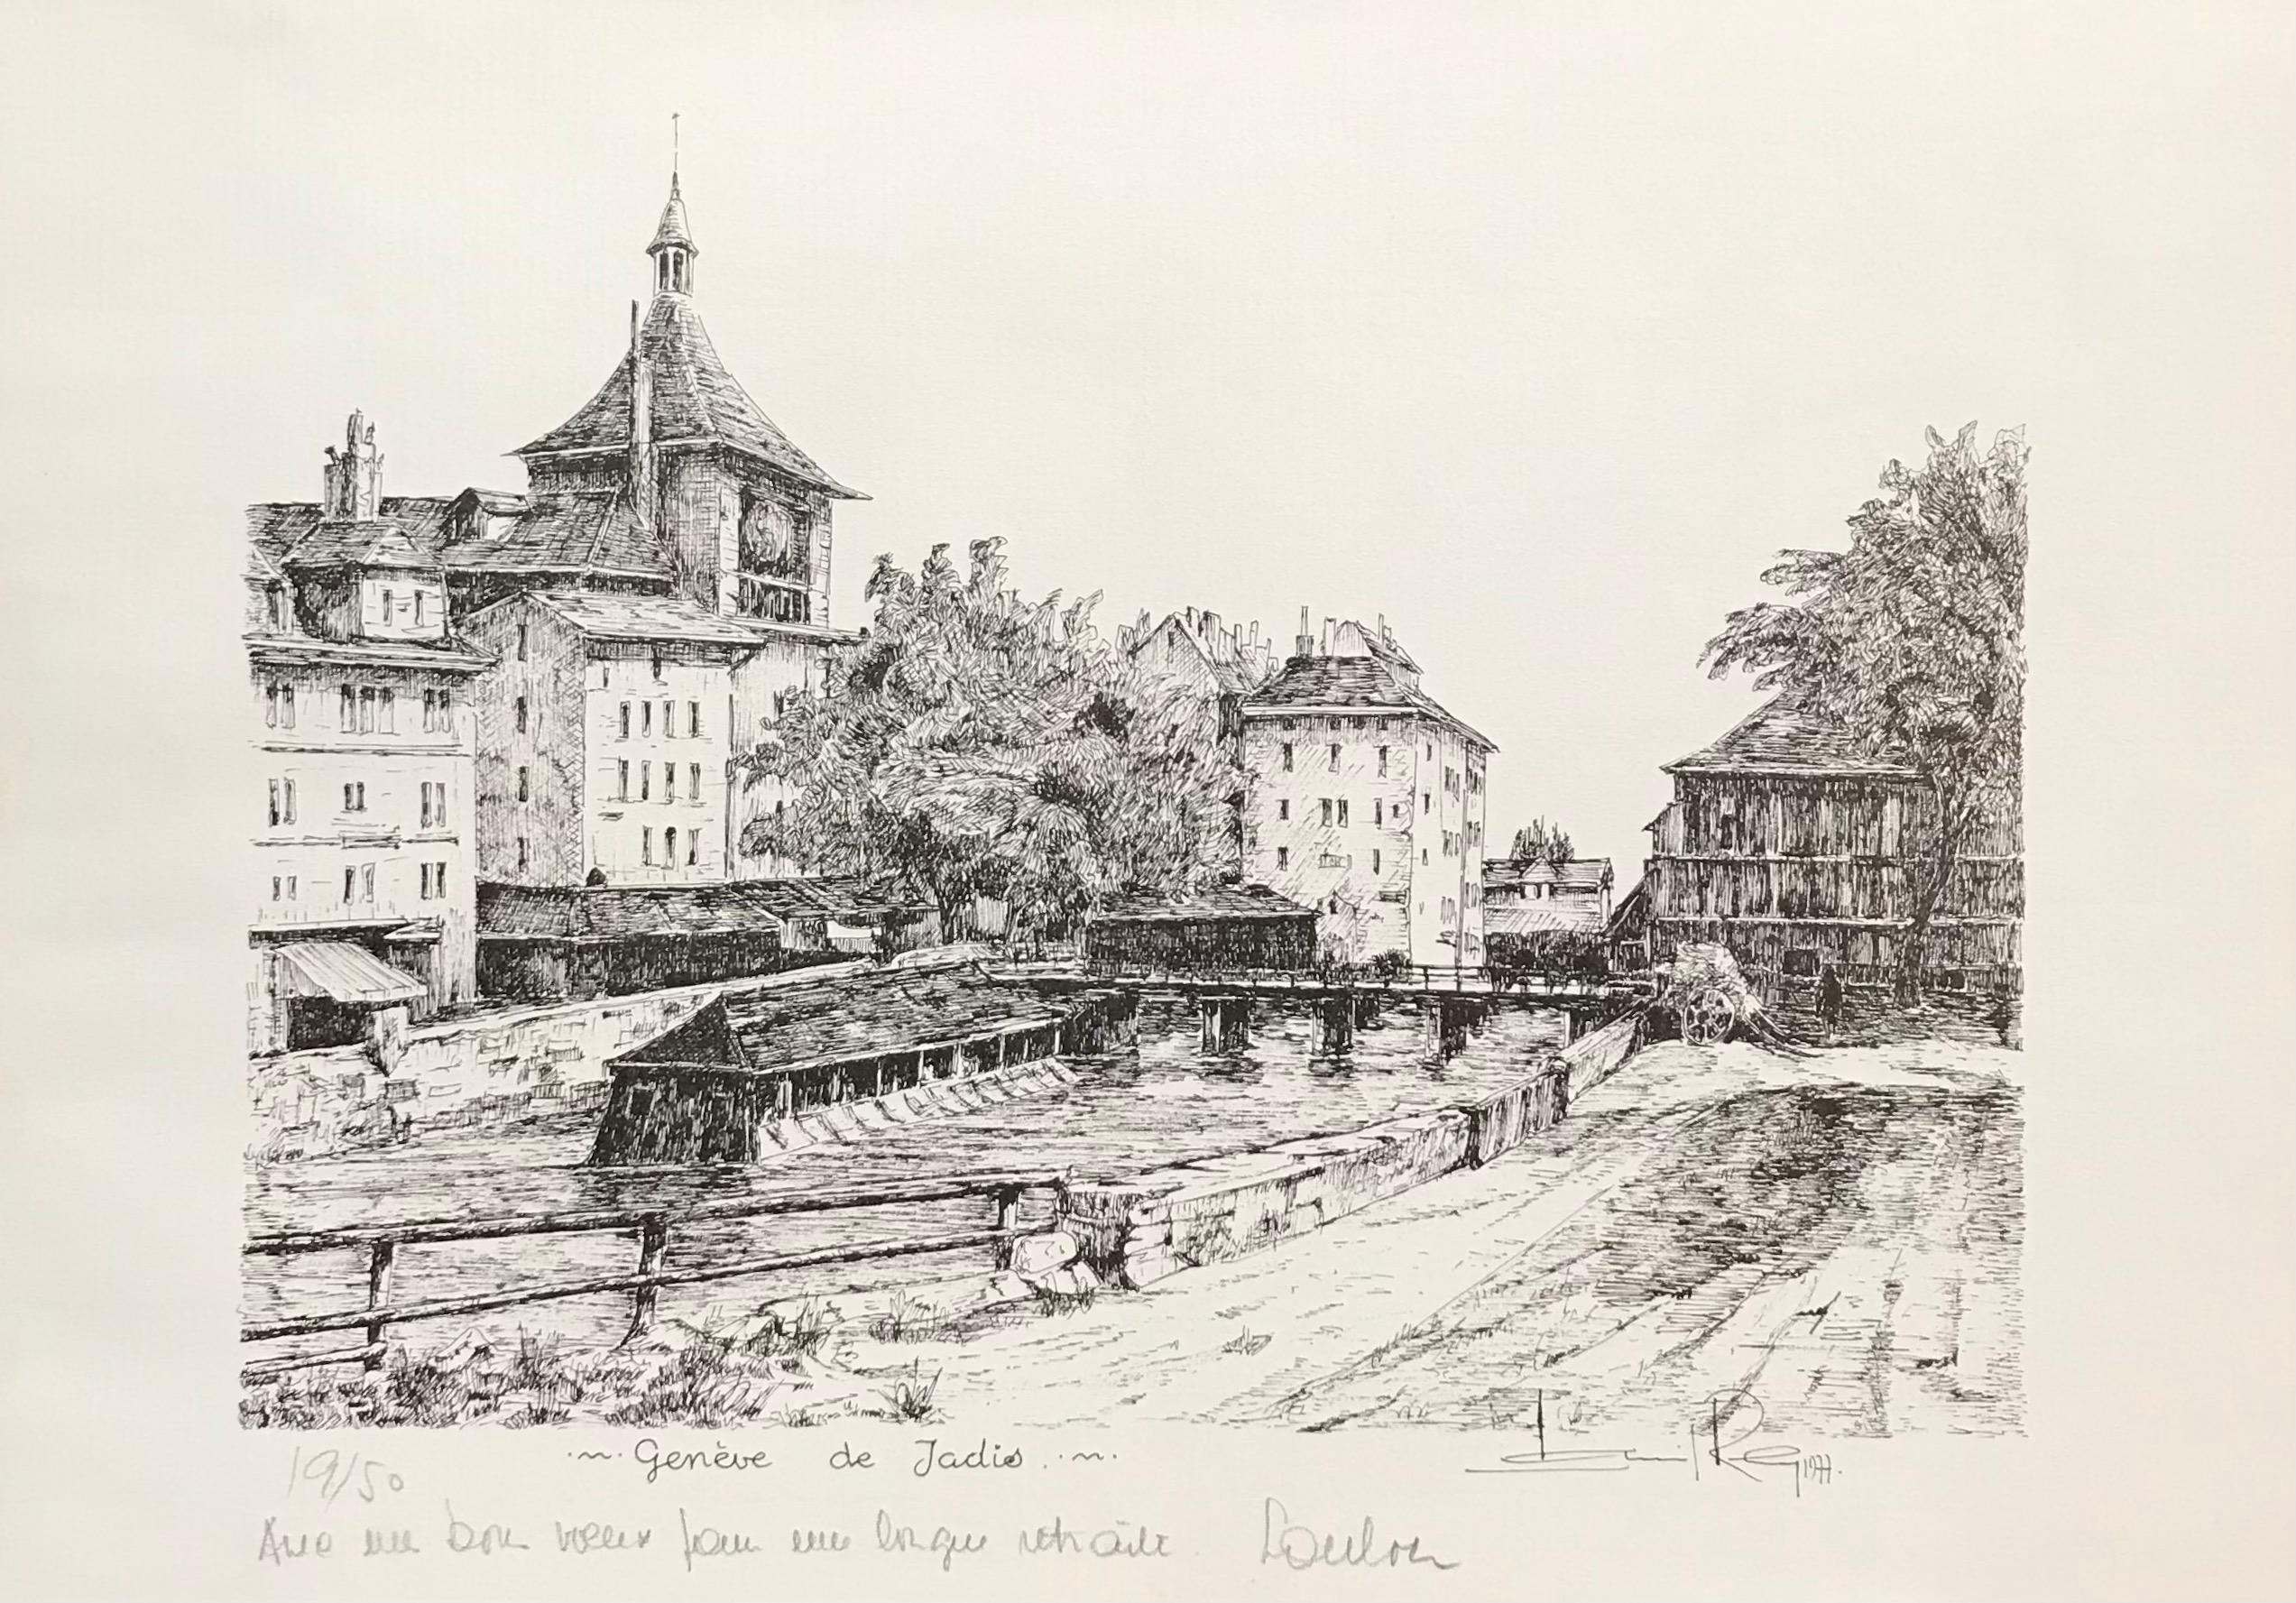 Geneva of yesteryear by Louis Rey - Ink 31x41 cm